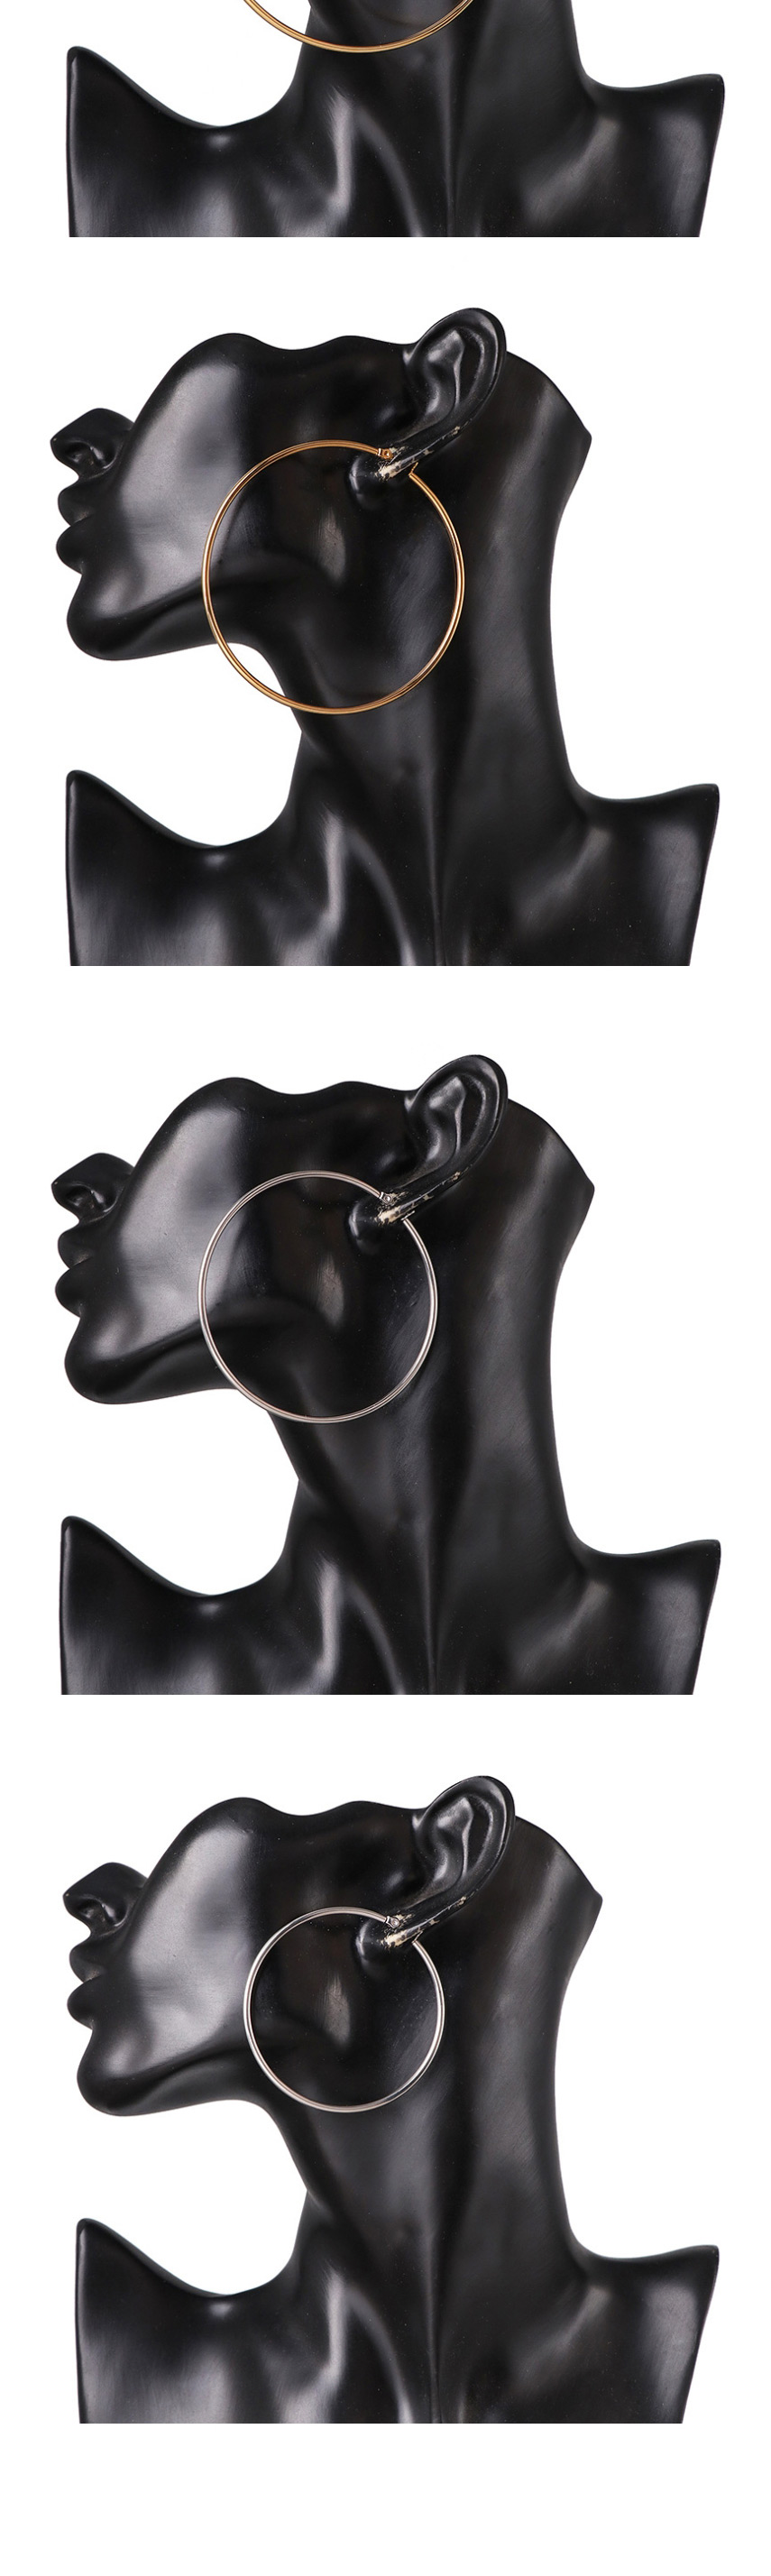 Fashion 2.5cm Gold Circle Earrings,Hoop Earrings